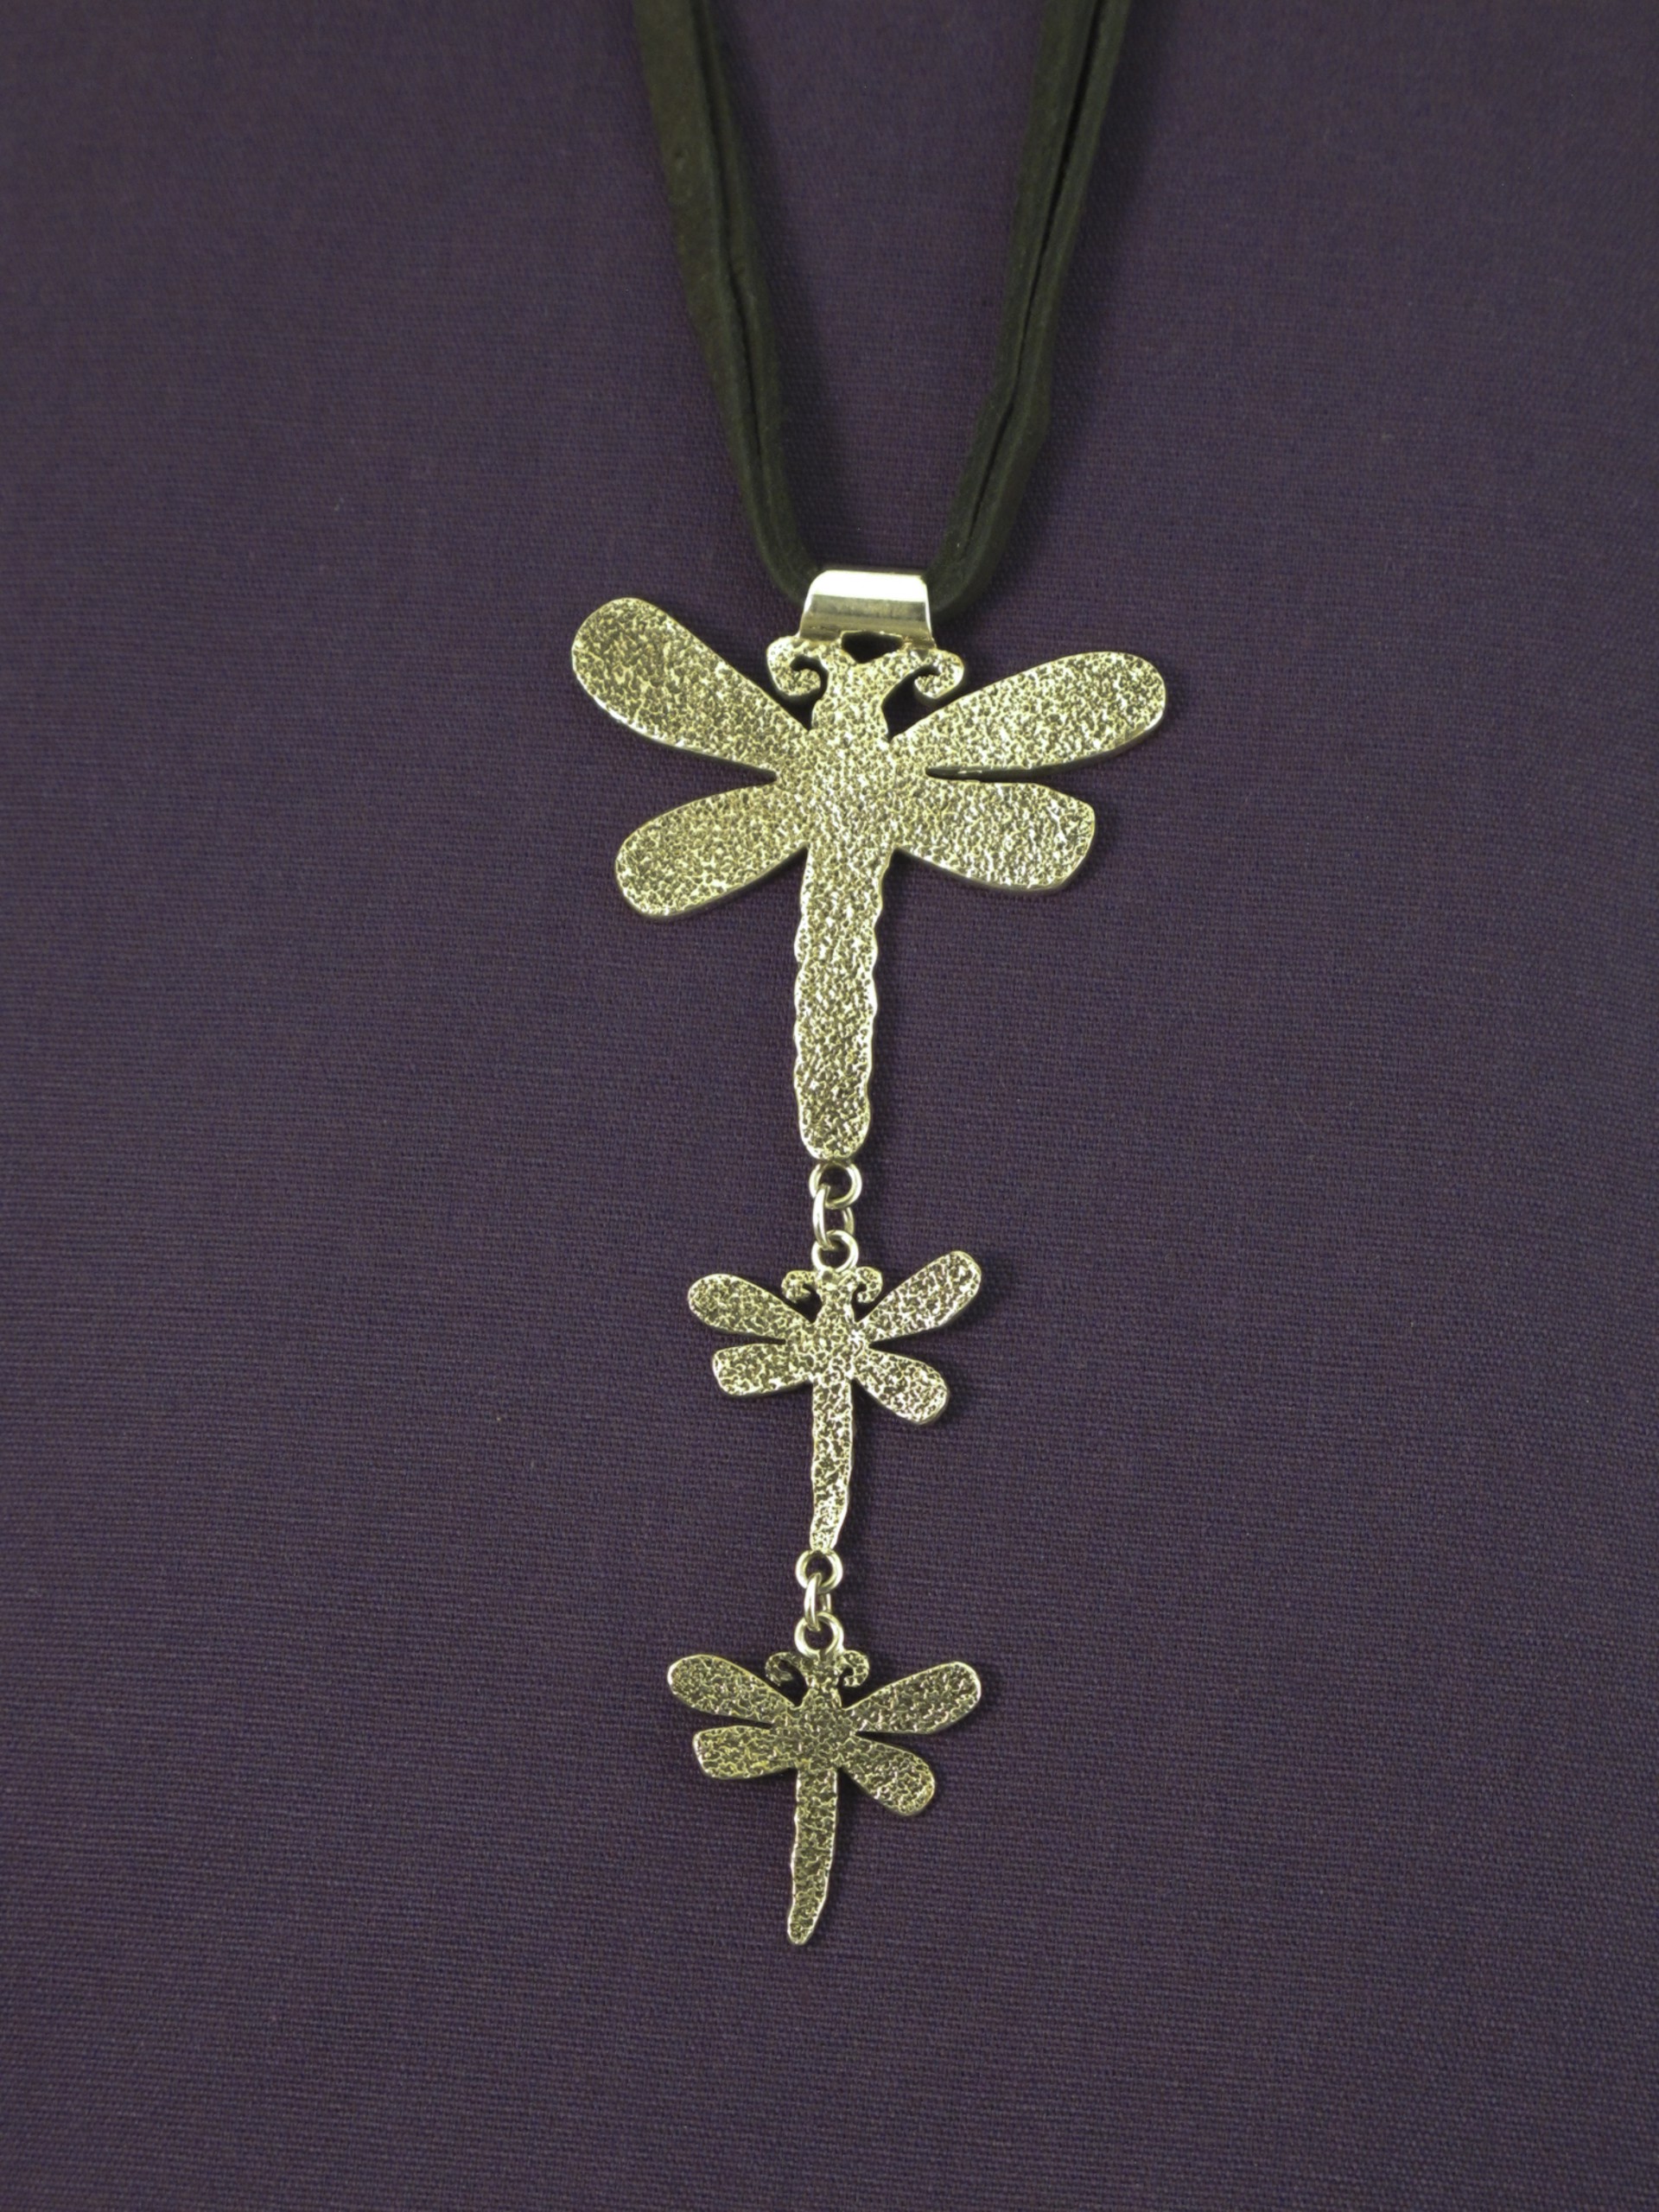 Dragonfly Drop pendant by Melanie A. Yazzie